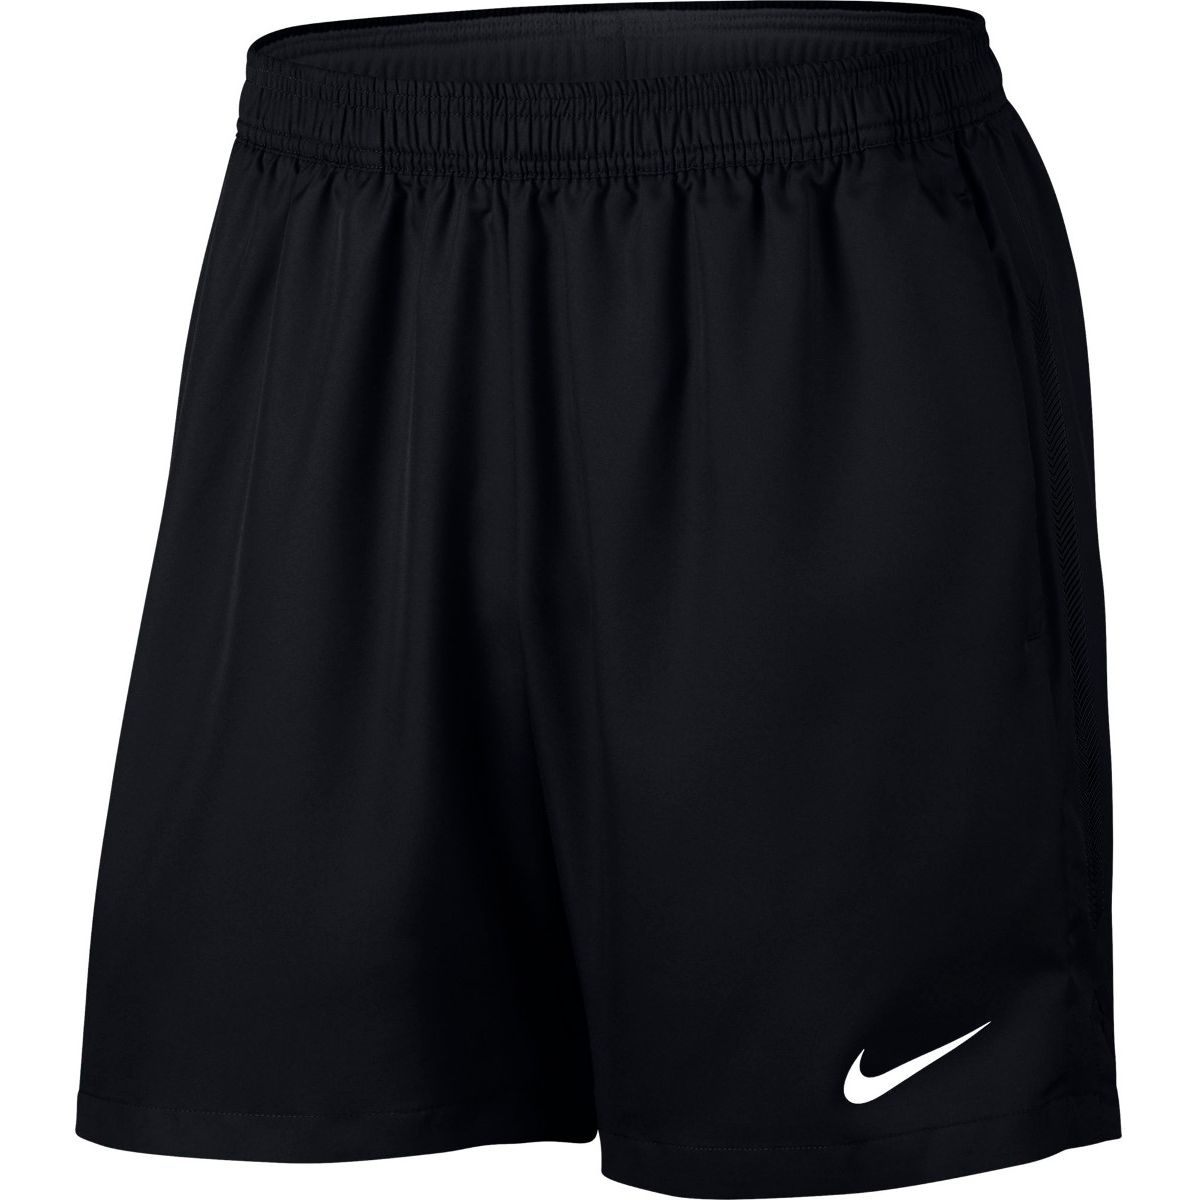 NikeCourt Dry Men's Tennis Shorts 830817-015